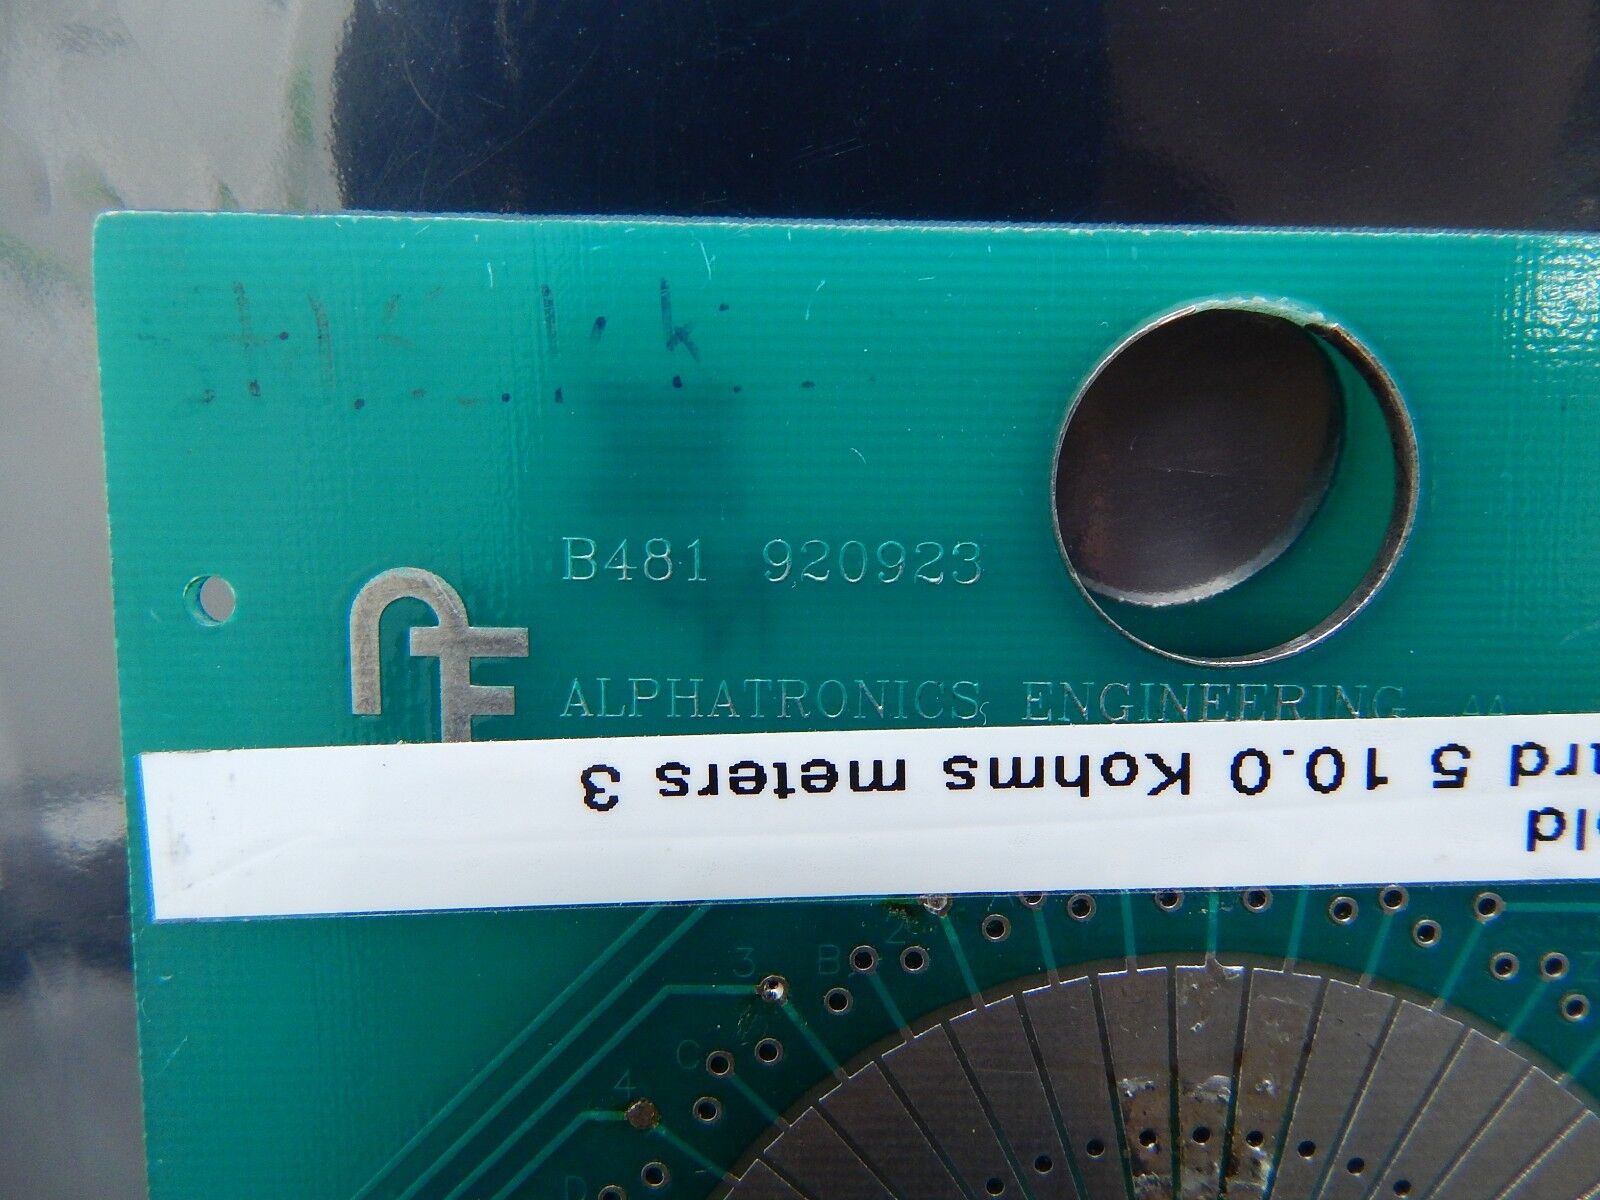 Alphatronics Gold Card 5 Probe Card PCB Standard B481 10.0 Kohms Meters 3 Used